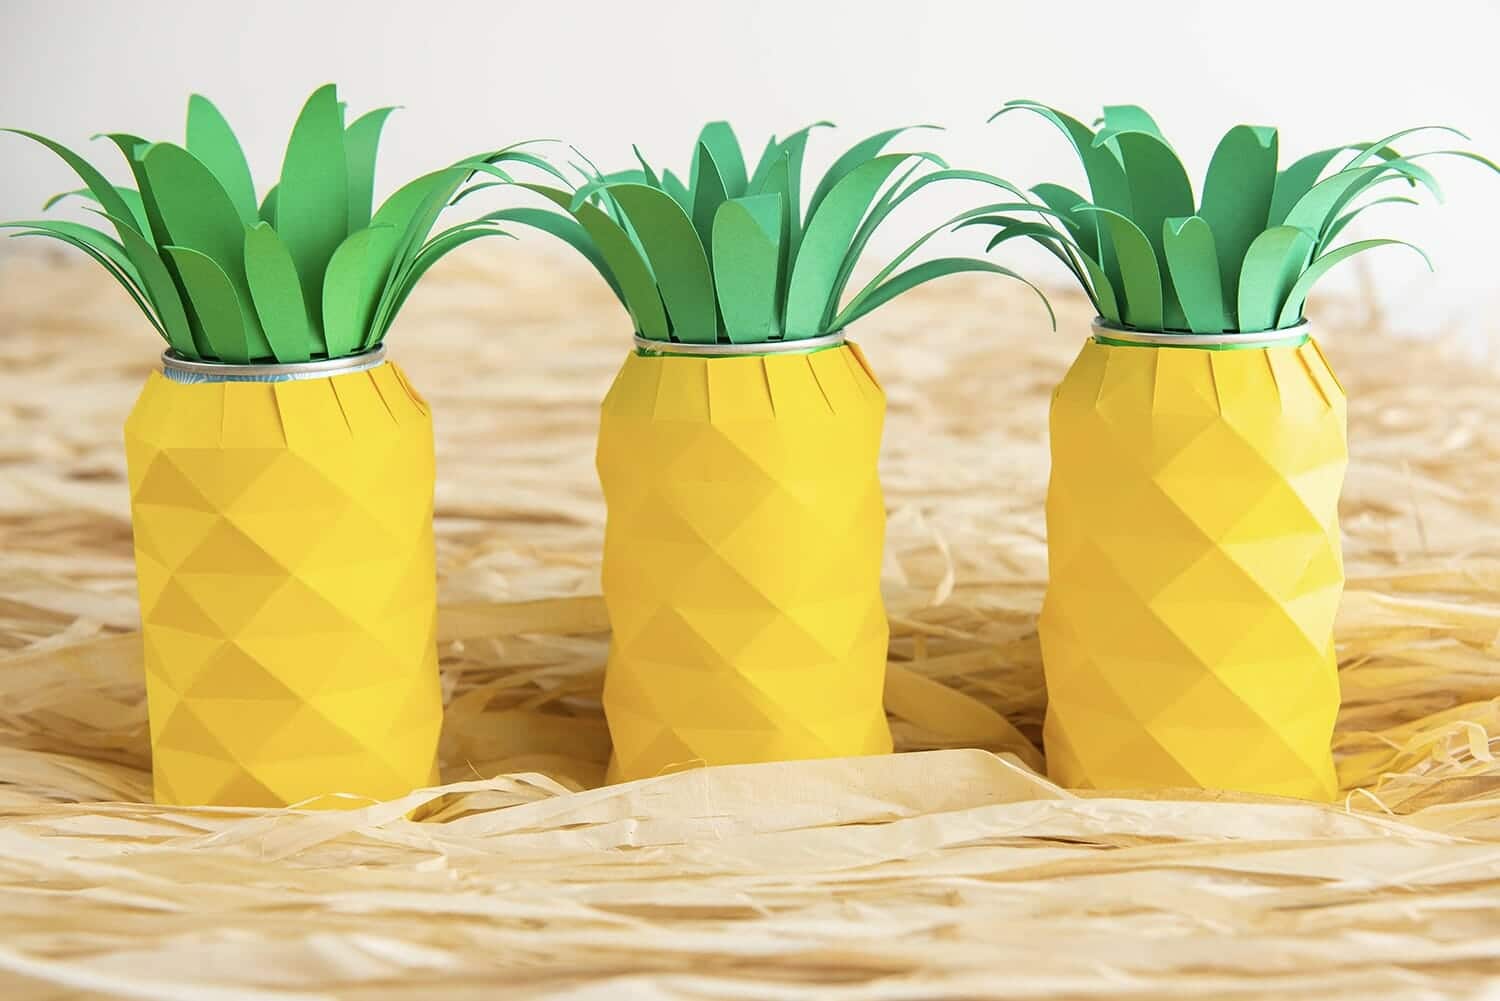 DIY Crafting Mug - 13 FREE SVG FILES - Pineapple Paper Co.